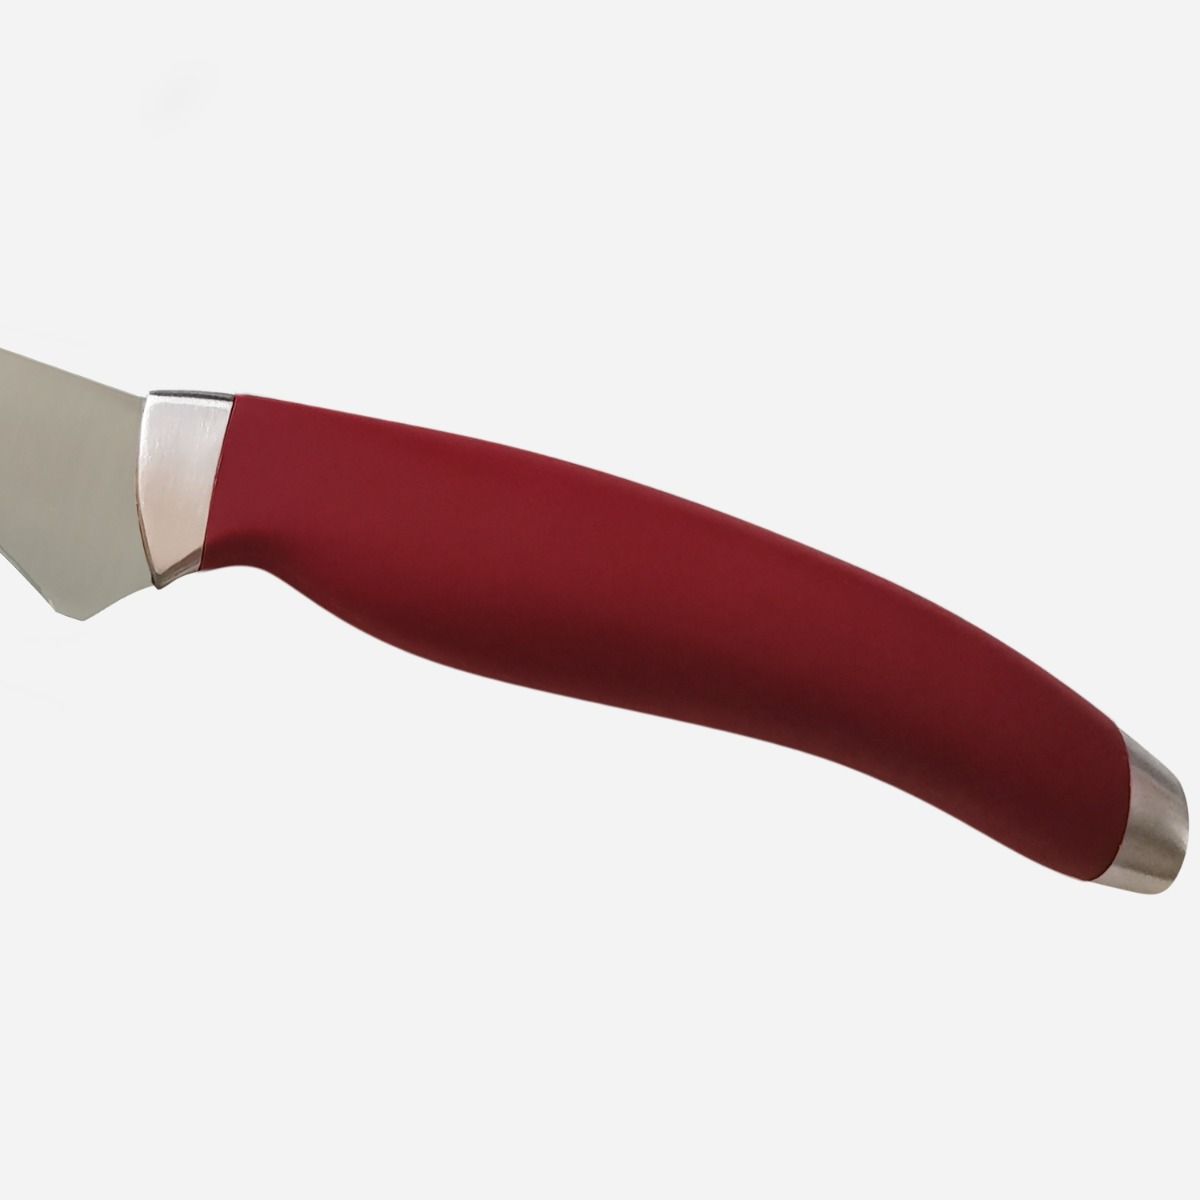 Chef's Knife 22 cm  Stainless Steel Berkel Teknica Handle Red Resin